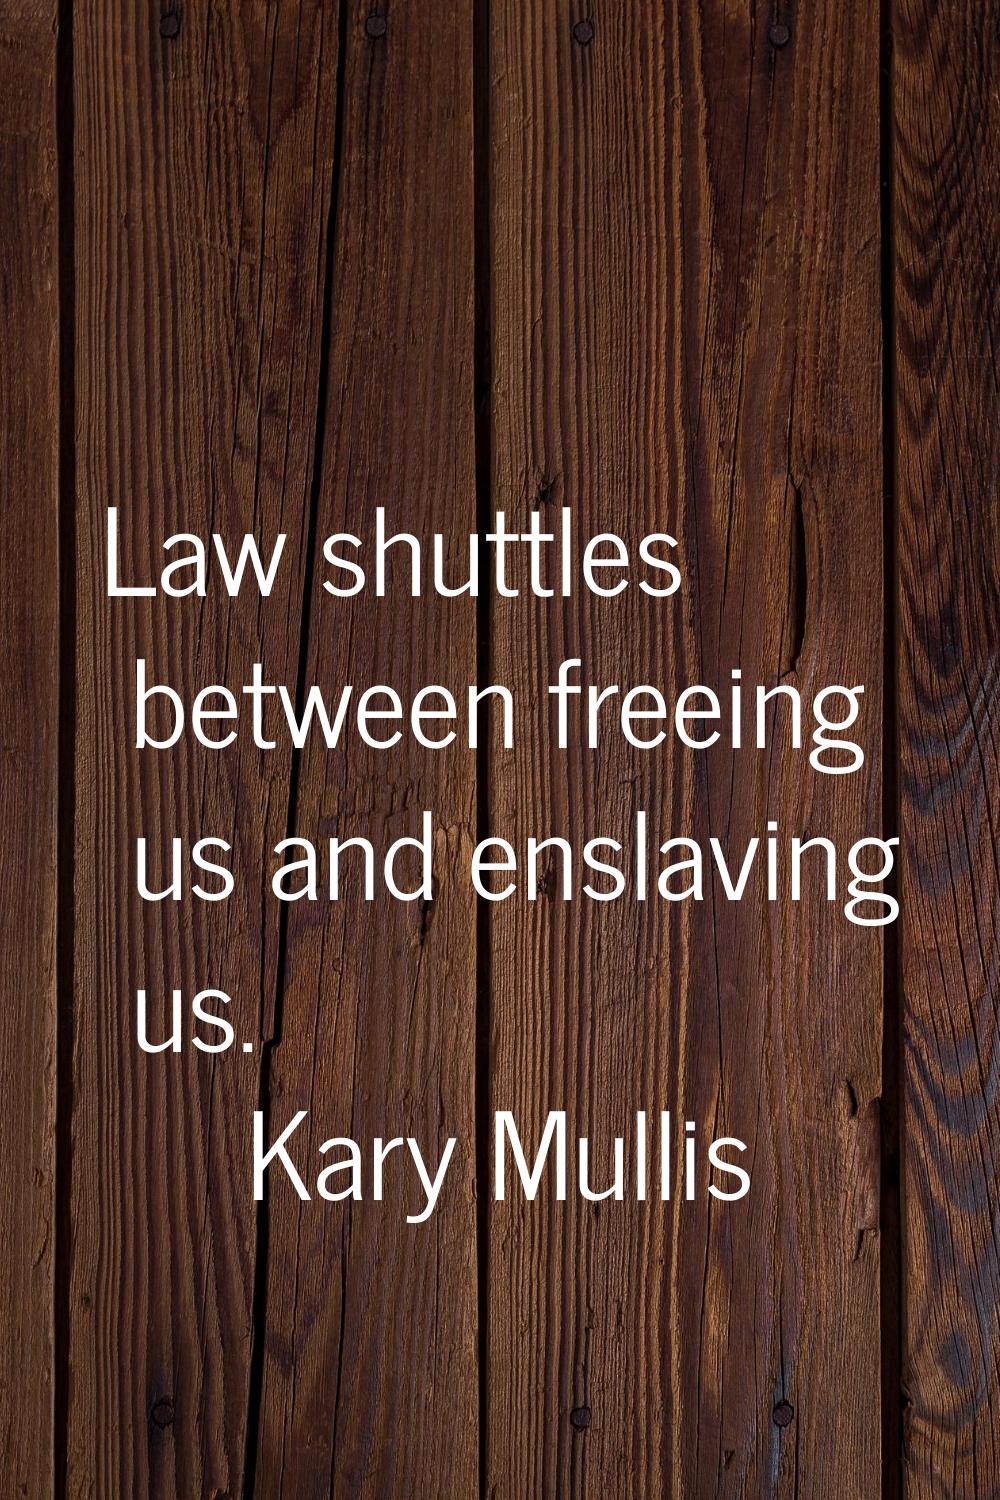 Law shuttles between freeing us and enslaving us.